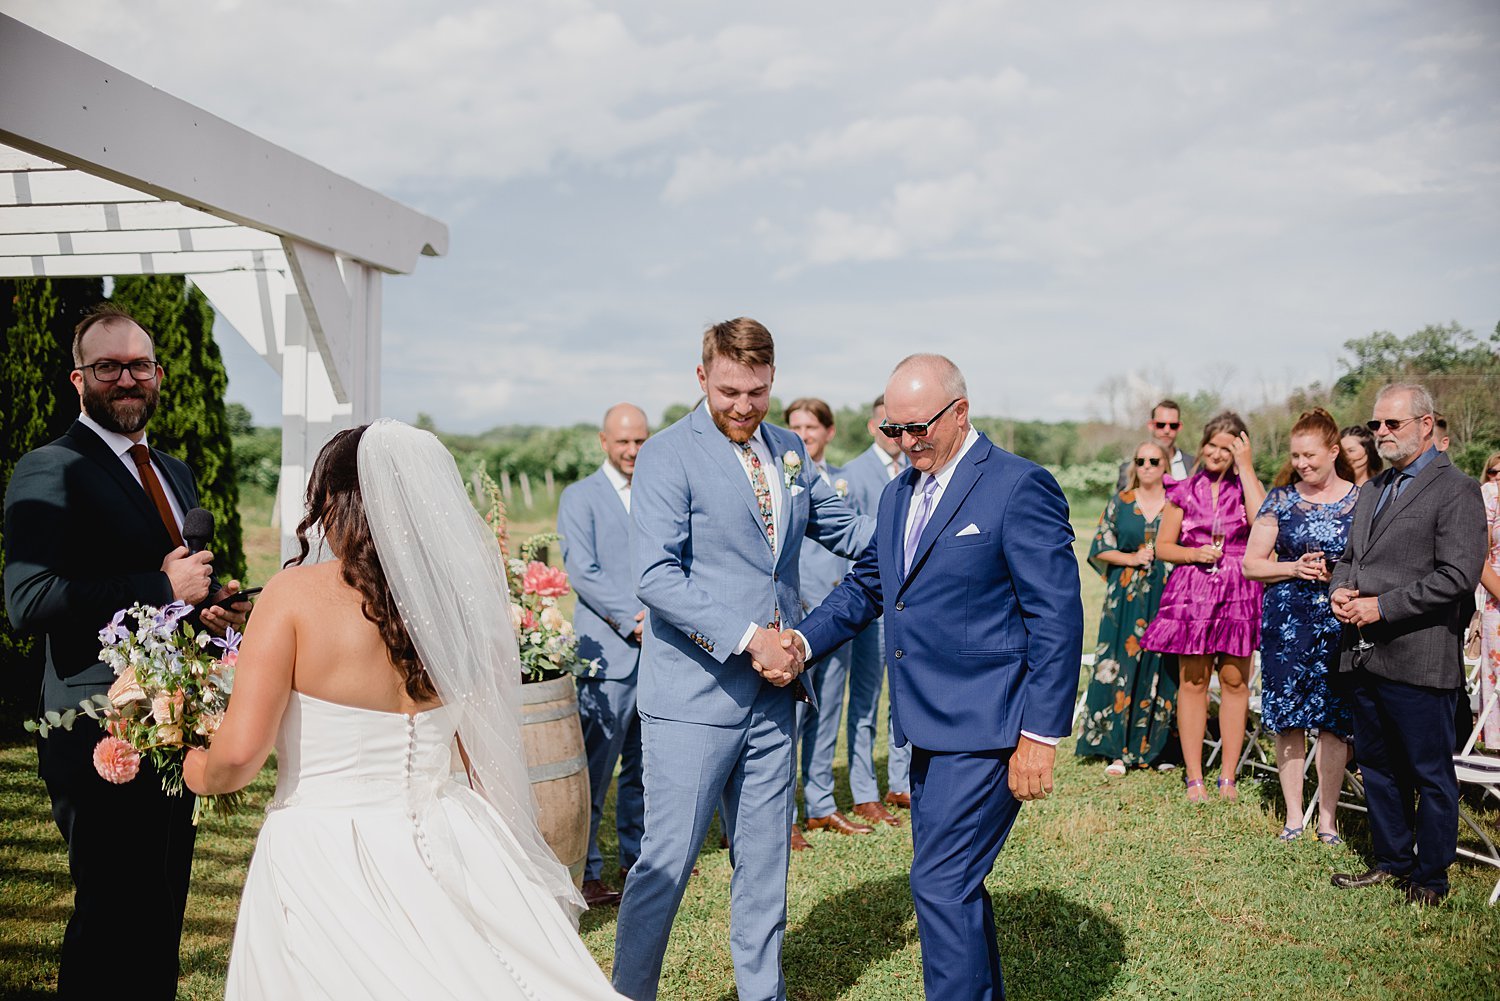 Casa Dea Winery Wedding in Prince Edward County | Prince Edward County Wedding Photographer | Holly McMurter Photographs_0076.jpg